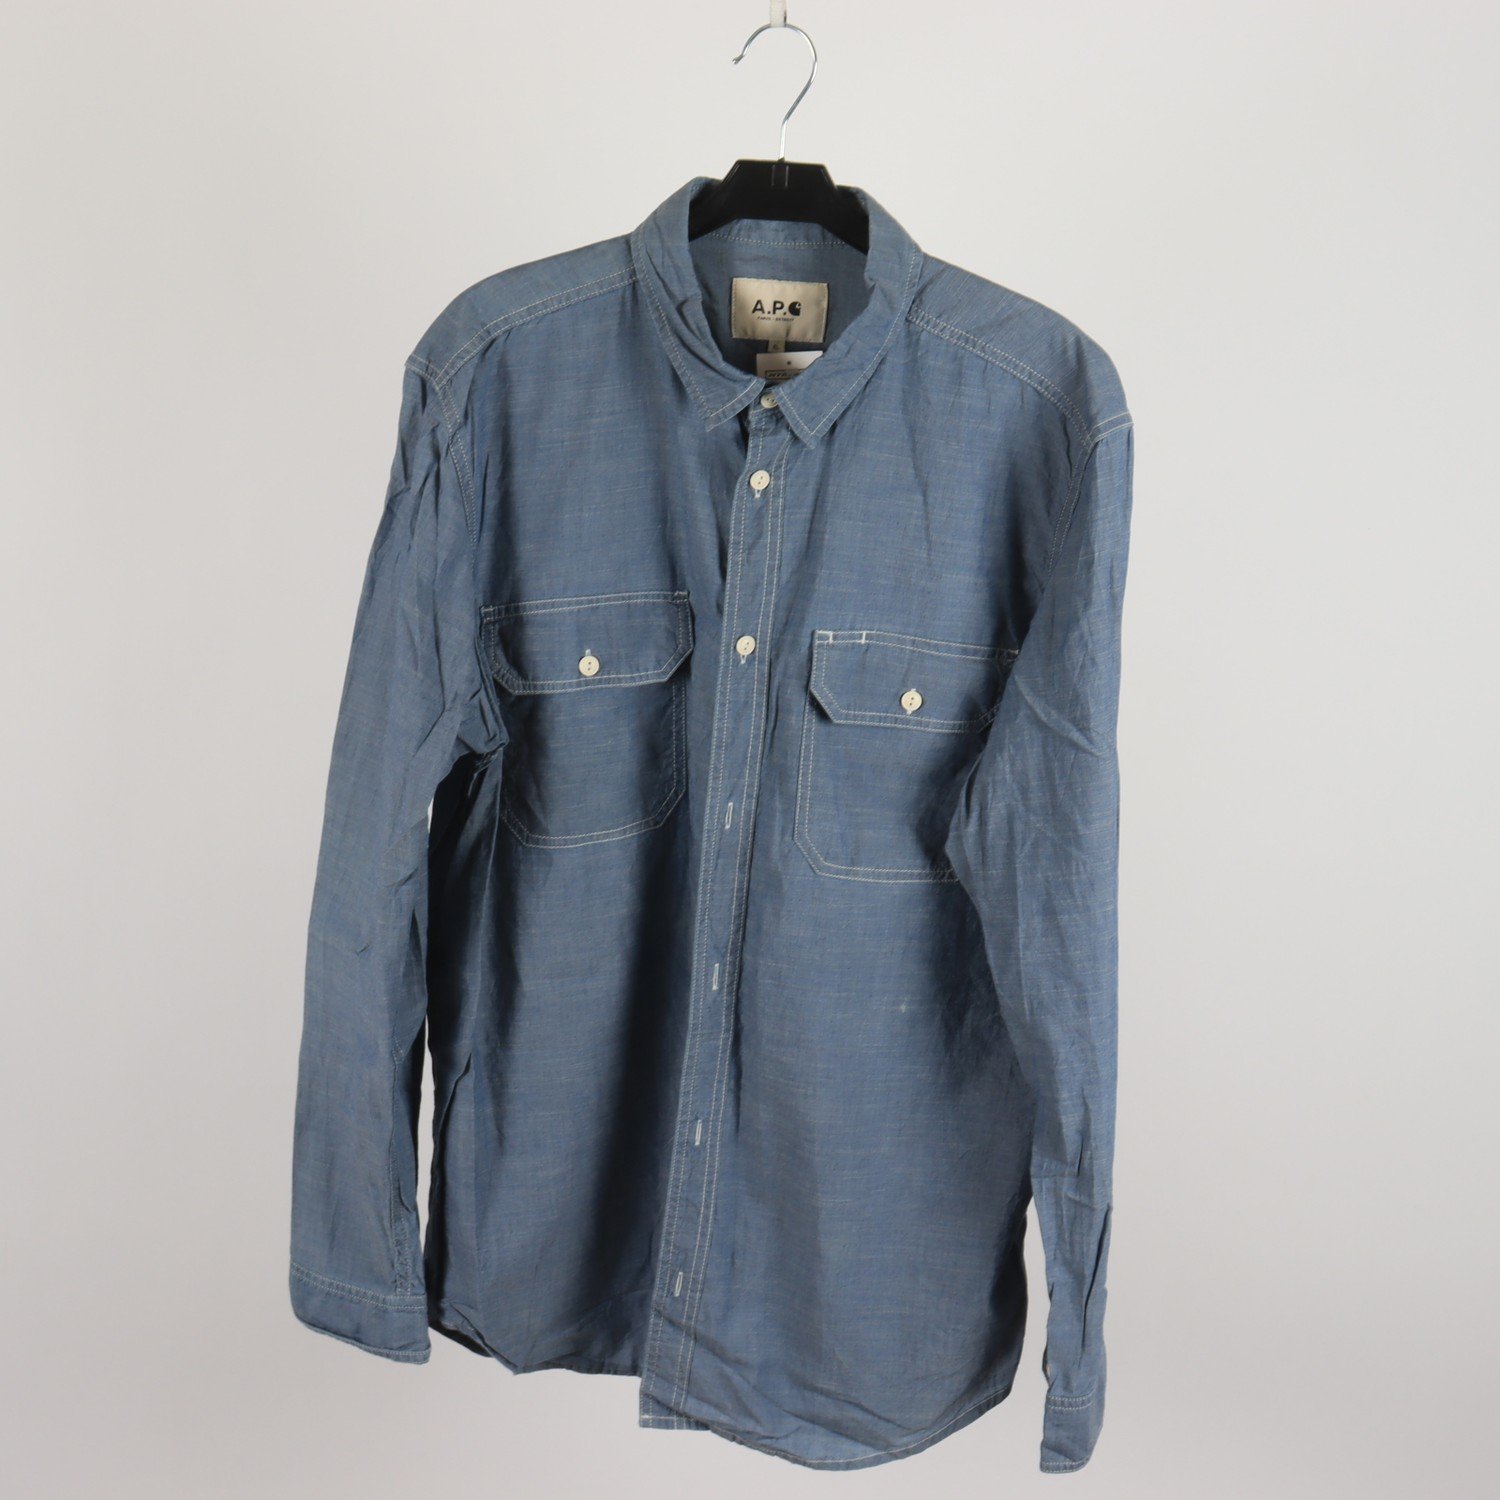 Skjorta, Carhartt, A.P.C, blå, stl. XL